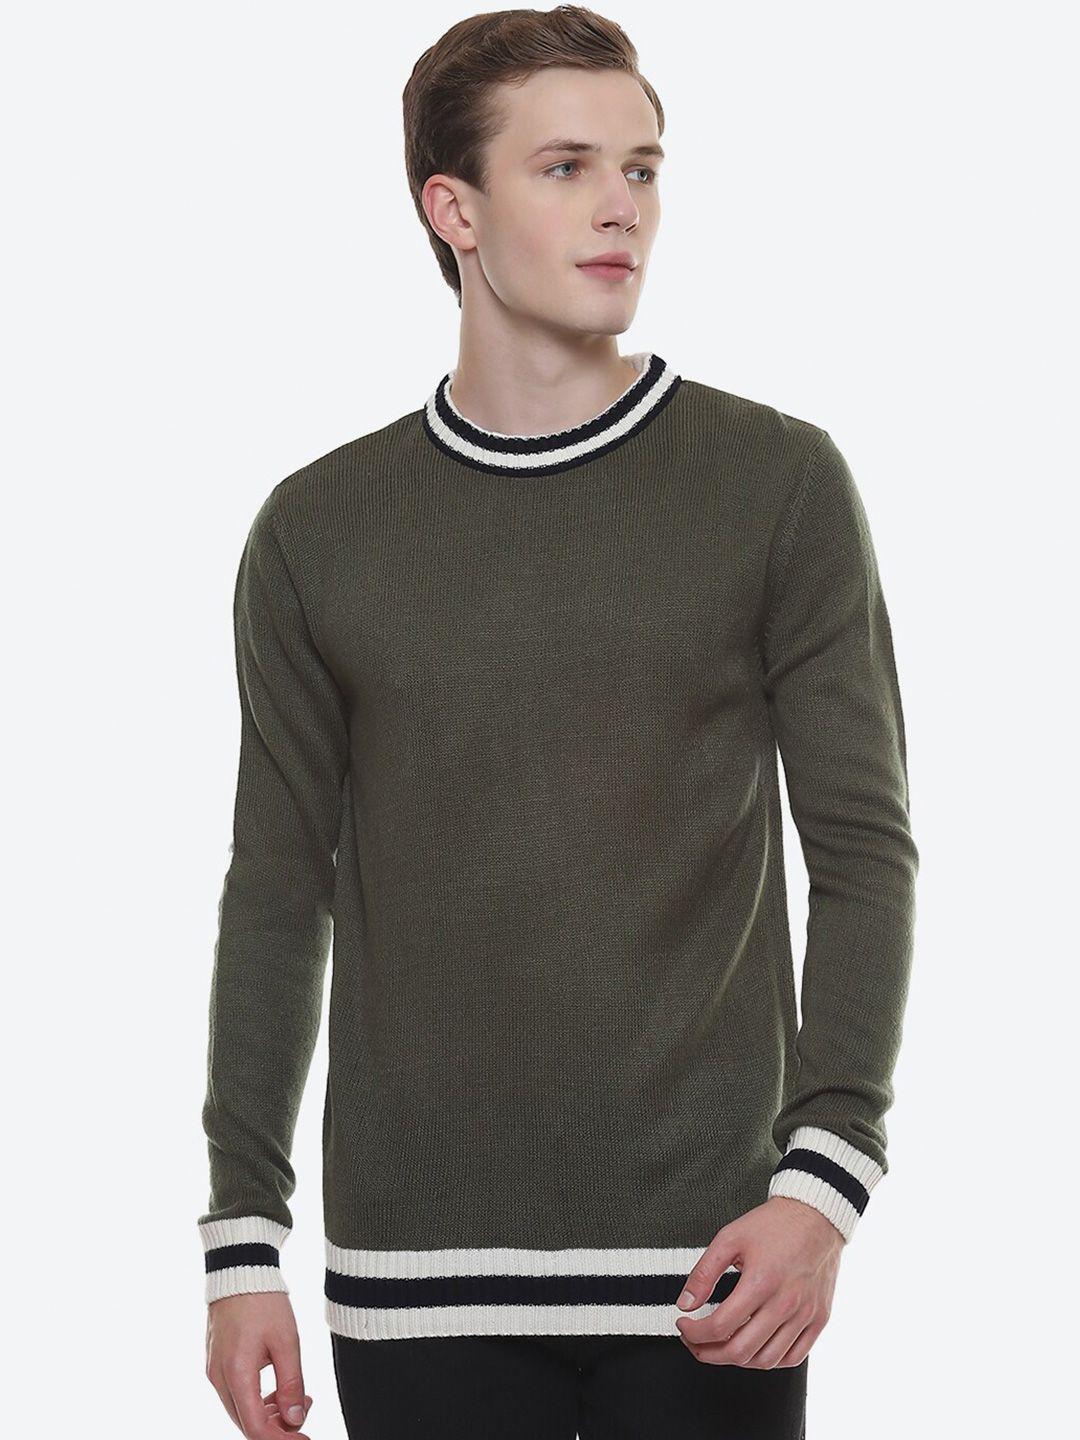 2bme round neck pullover cotton sweater